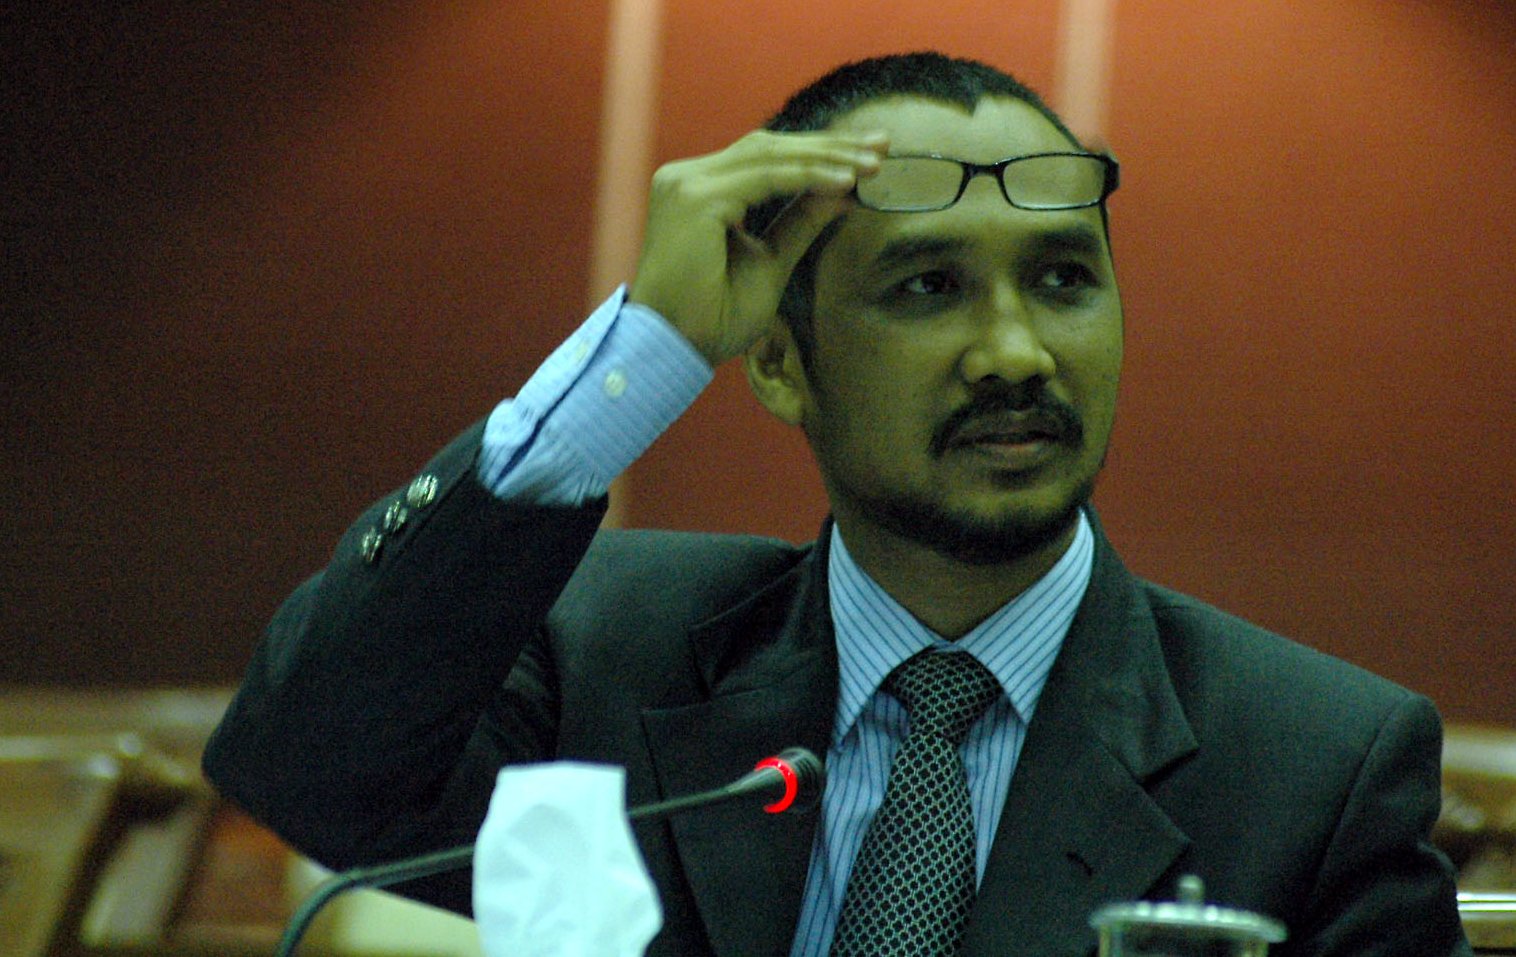 Mantan Ketua Komisi Pemberantasan Korupsi Abraham Samad. (Foto: Antara)